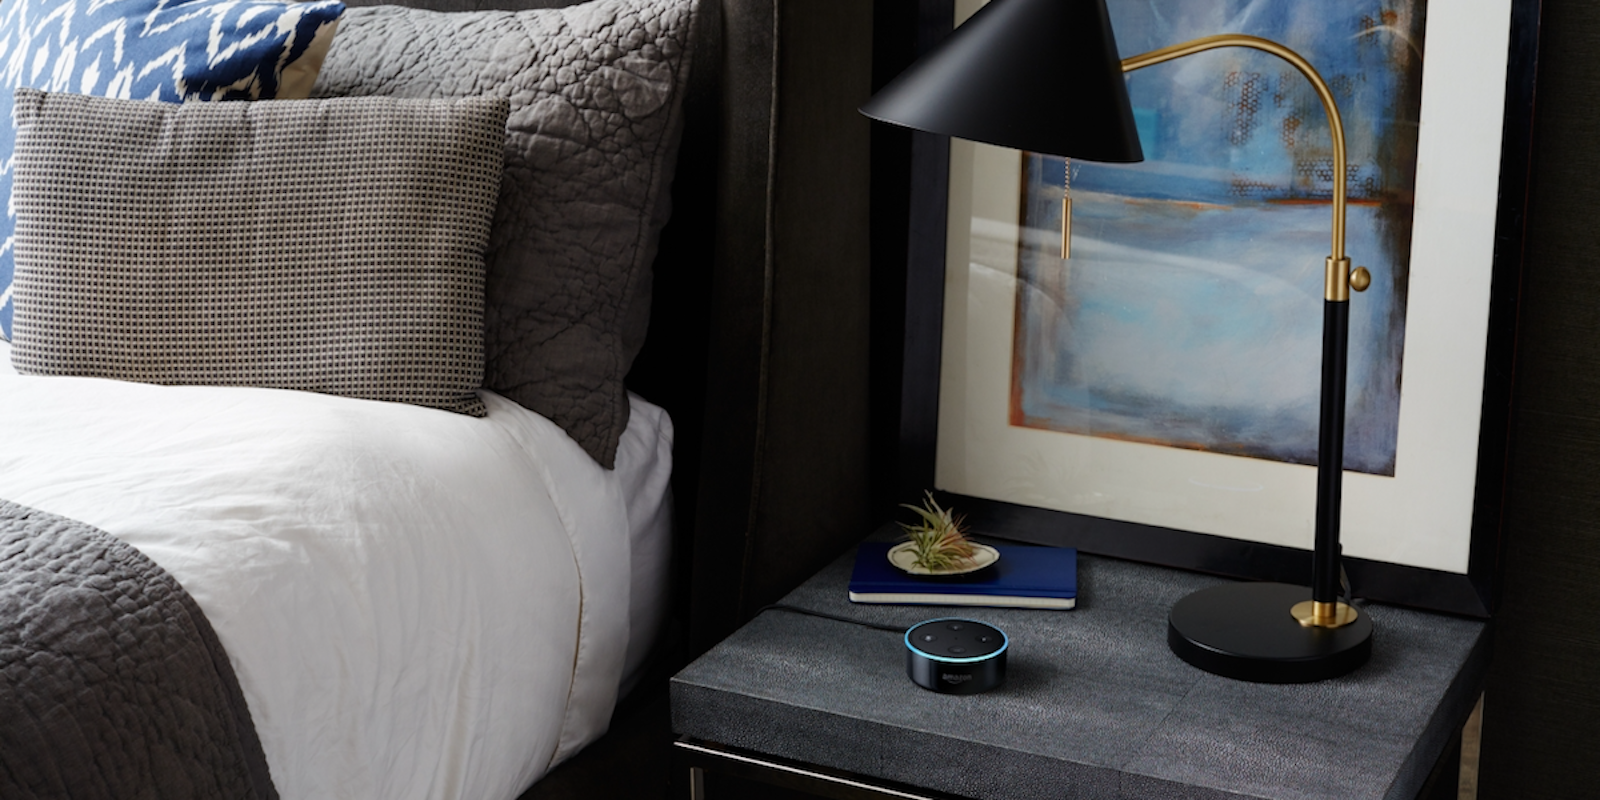 Echo Dot on bedside table